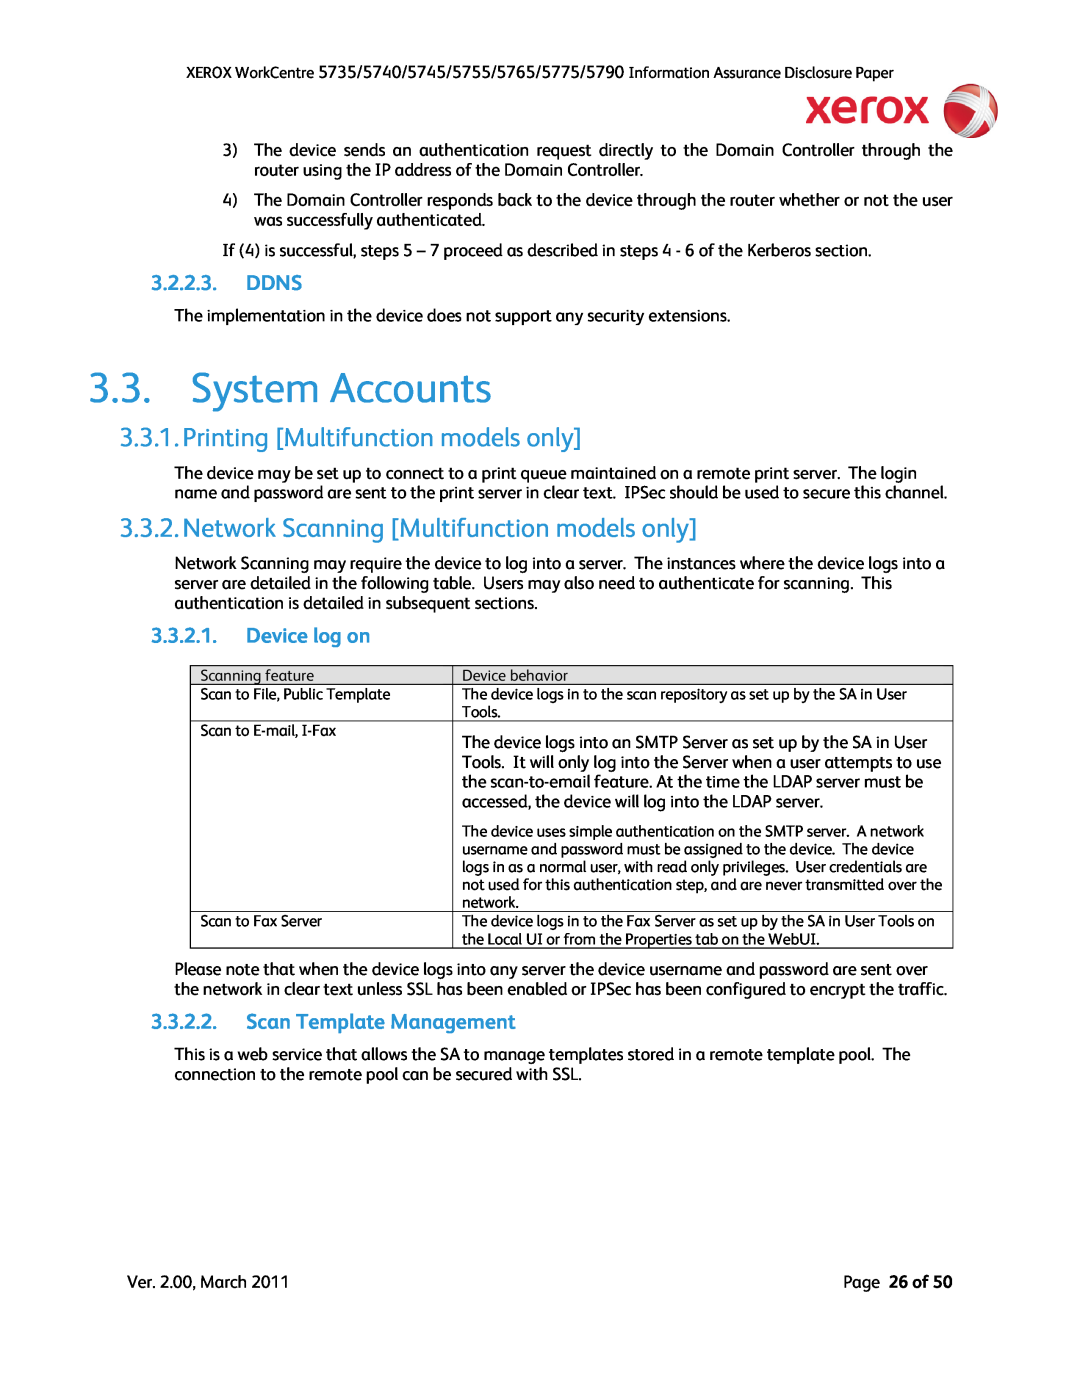 Xerox 5745 System Accounts, Printing Multifunction models only, Network Scanning Multifunction models only, Ddns, 3.3.2.1 